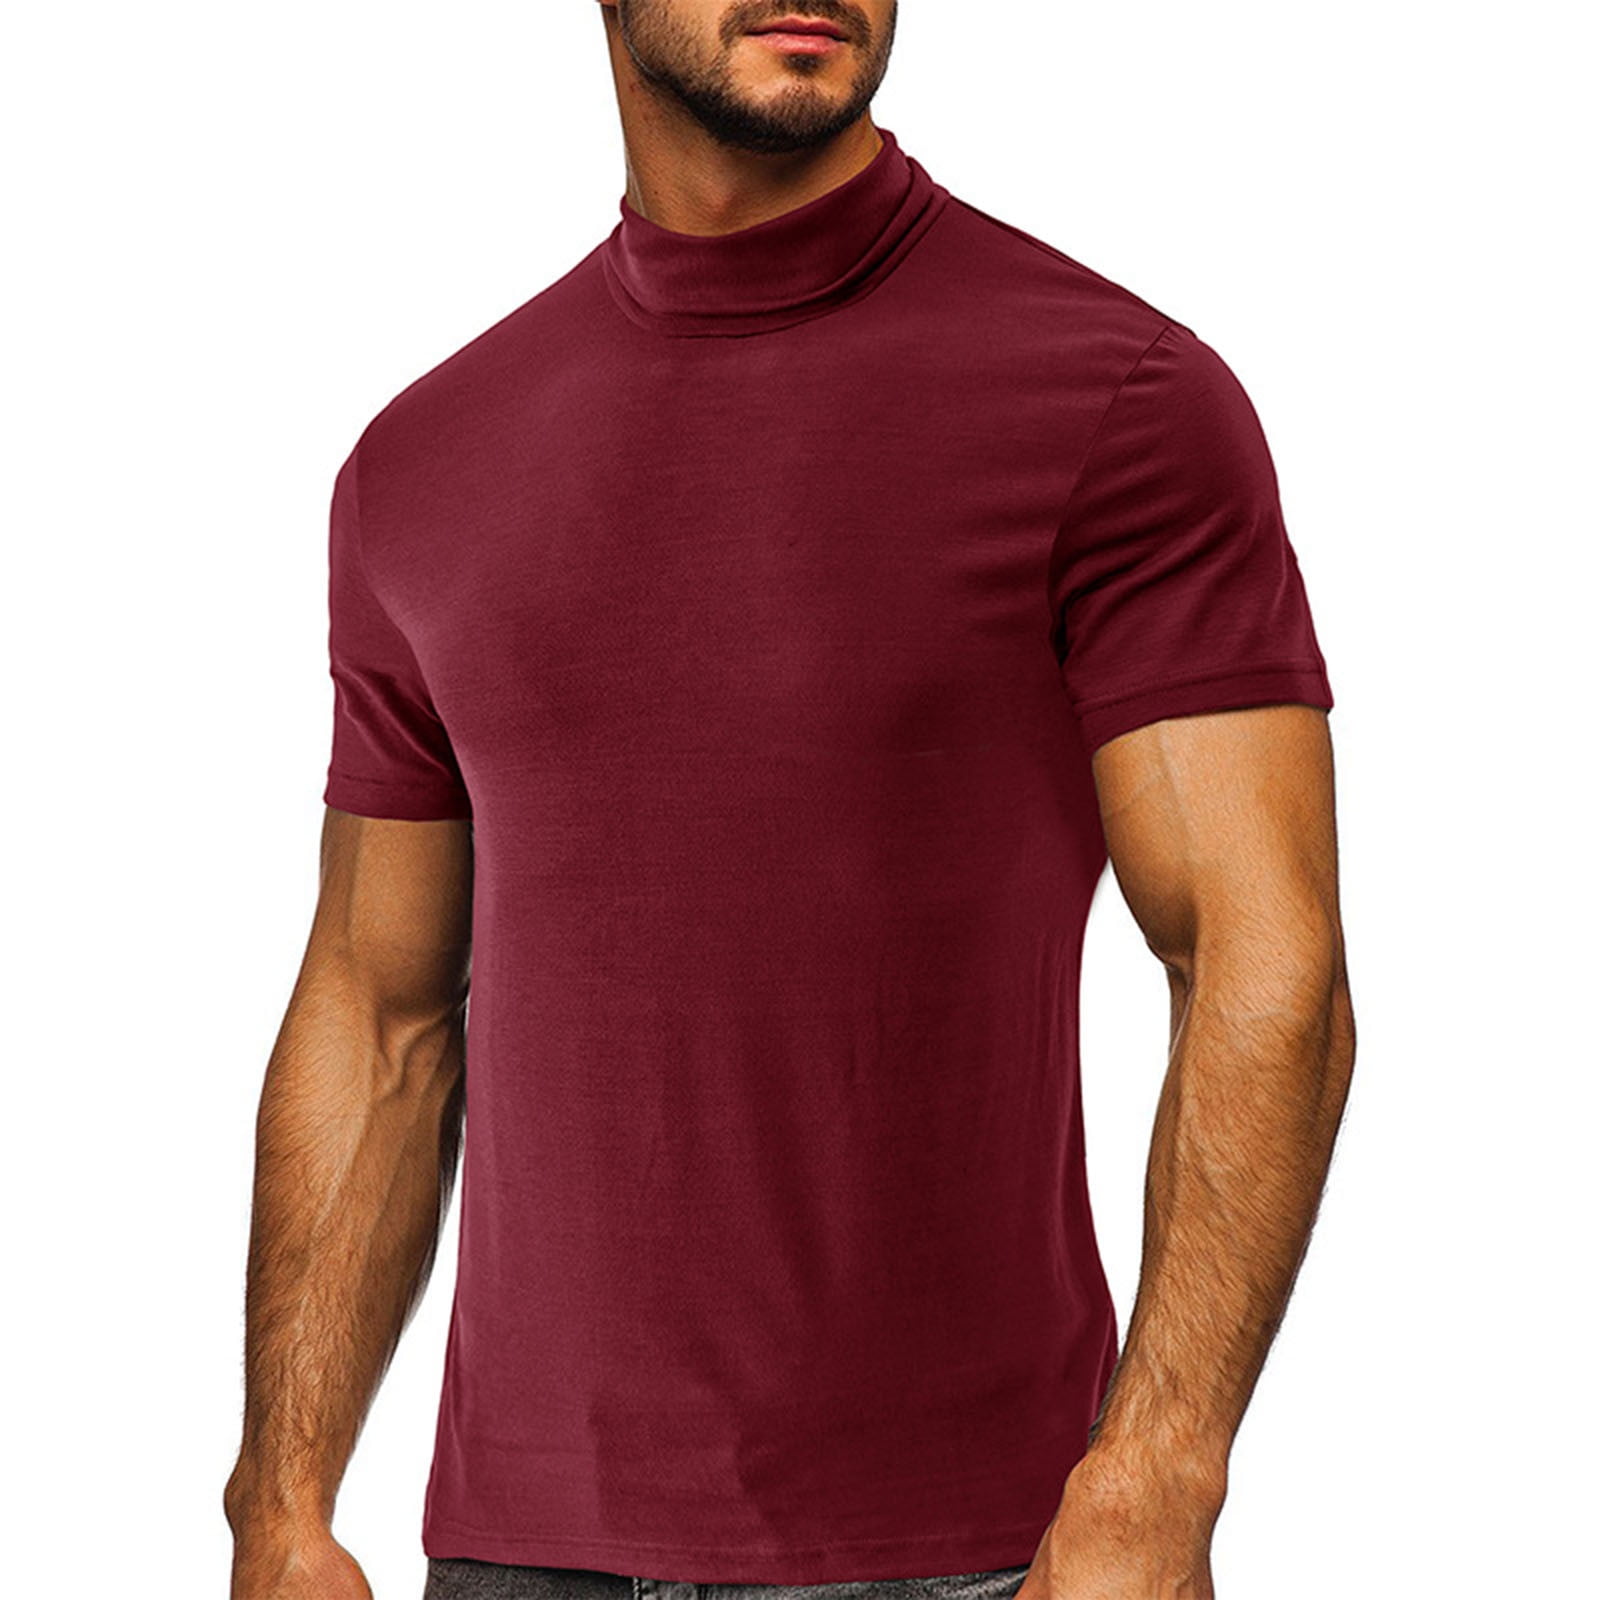 Buy GymX - Burgundy T-Shirts (Men's Sports Wear T-Shirts) (XL, Cotton) at